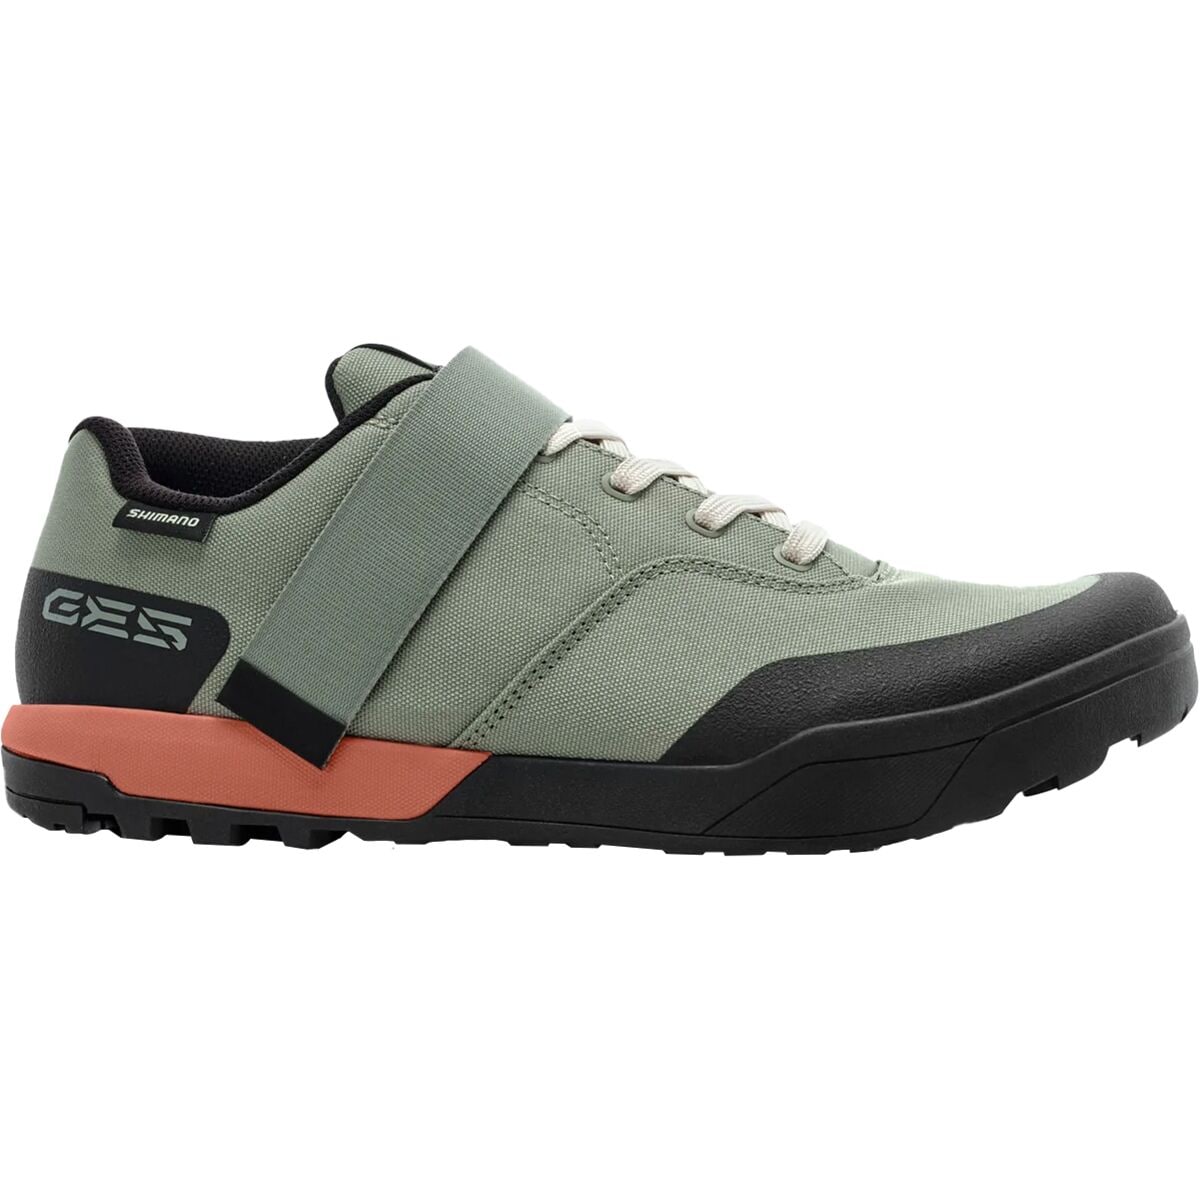 GE500 MTB Shoe - Men